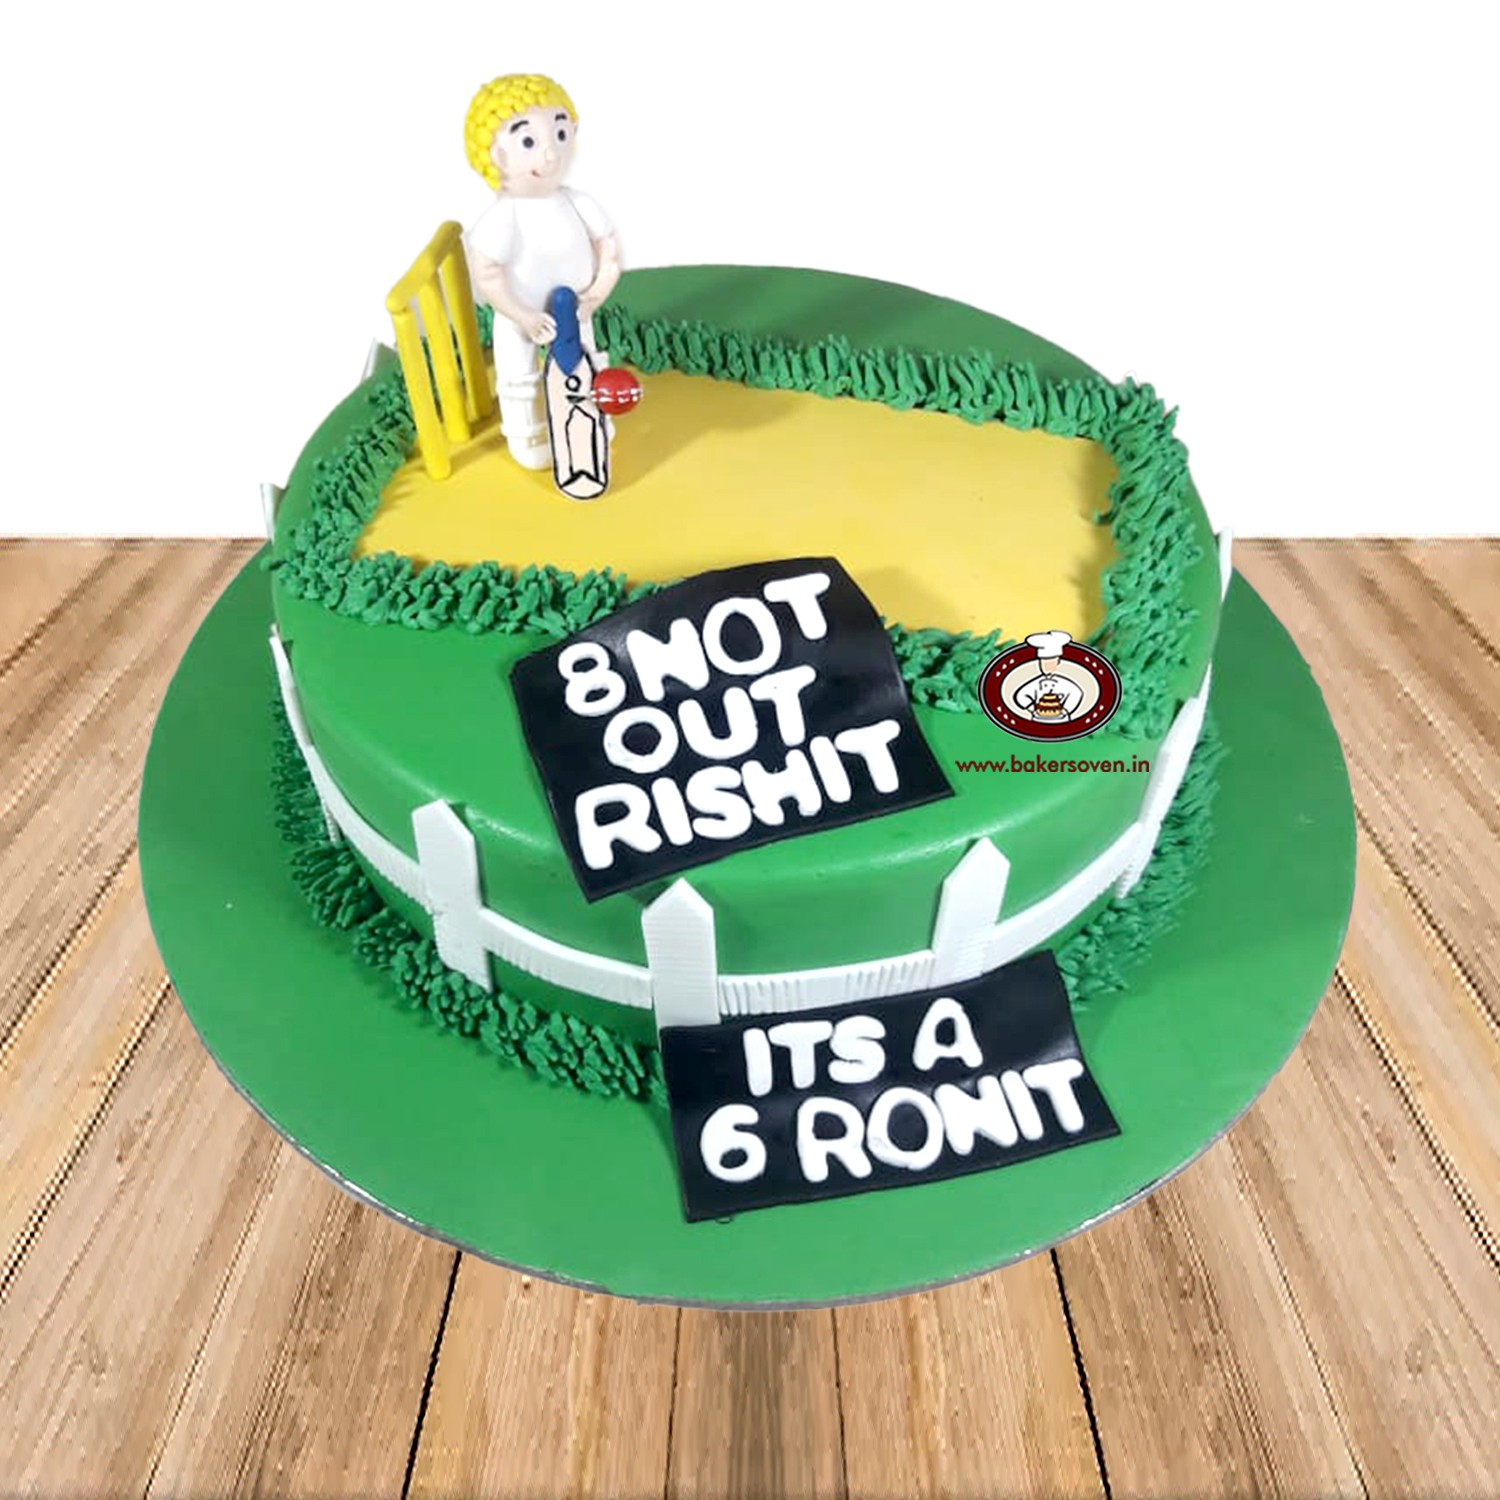 Cricket cake - Decorated Cake by elenasartofcakes - CakesDecor